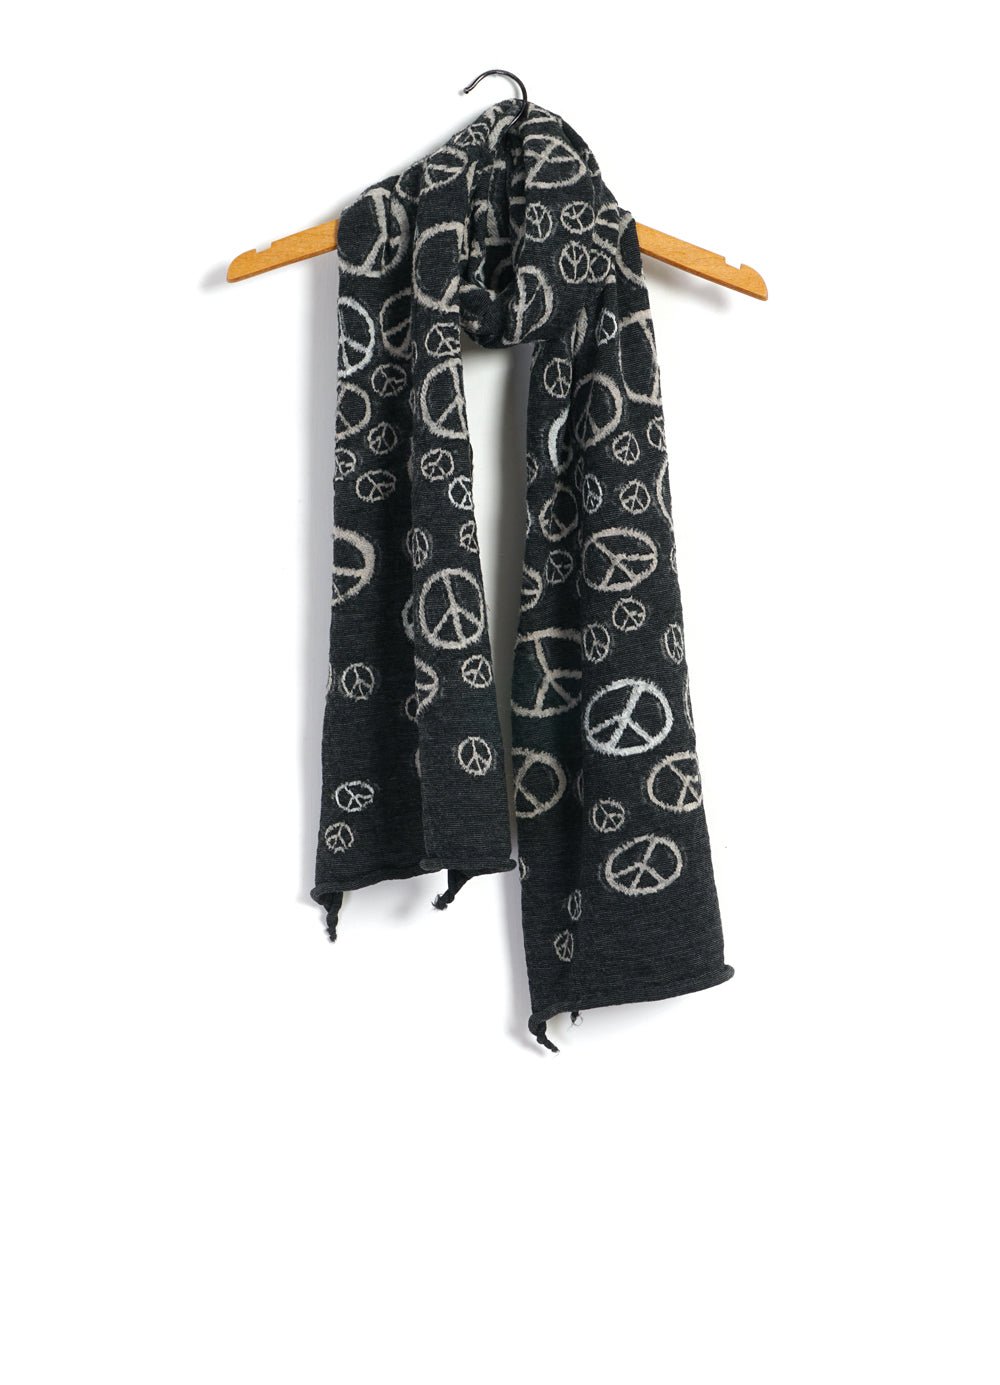 KAPITAL - PEACE | Compressed Wool Scarf | Black - HANSEN Garments